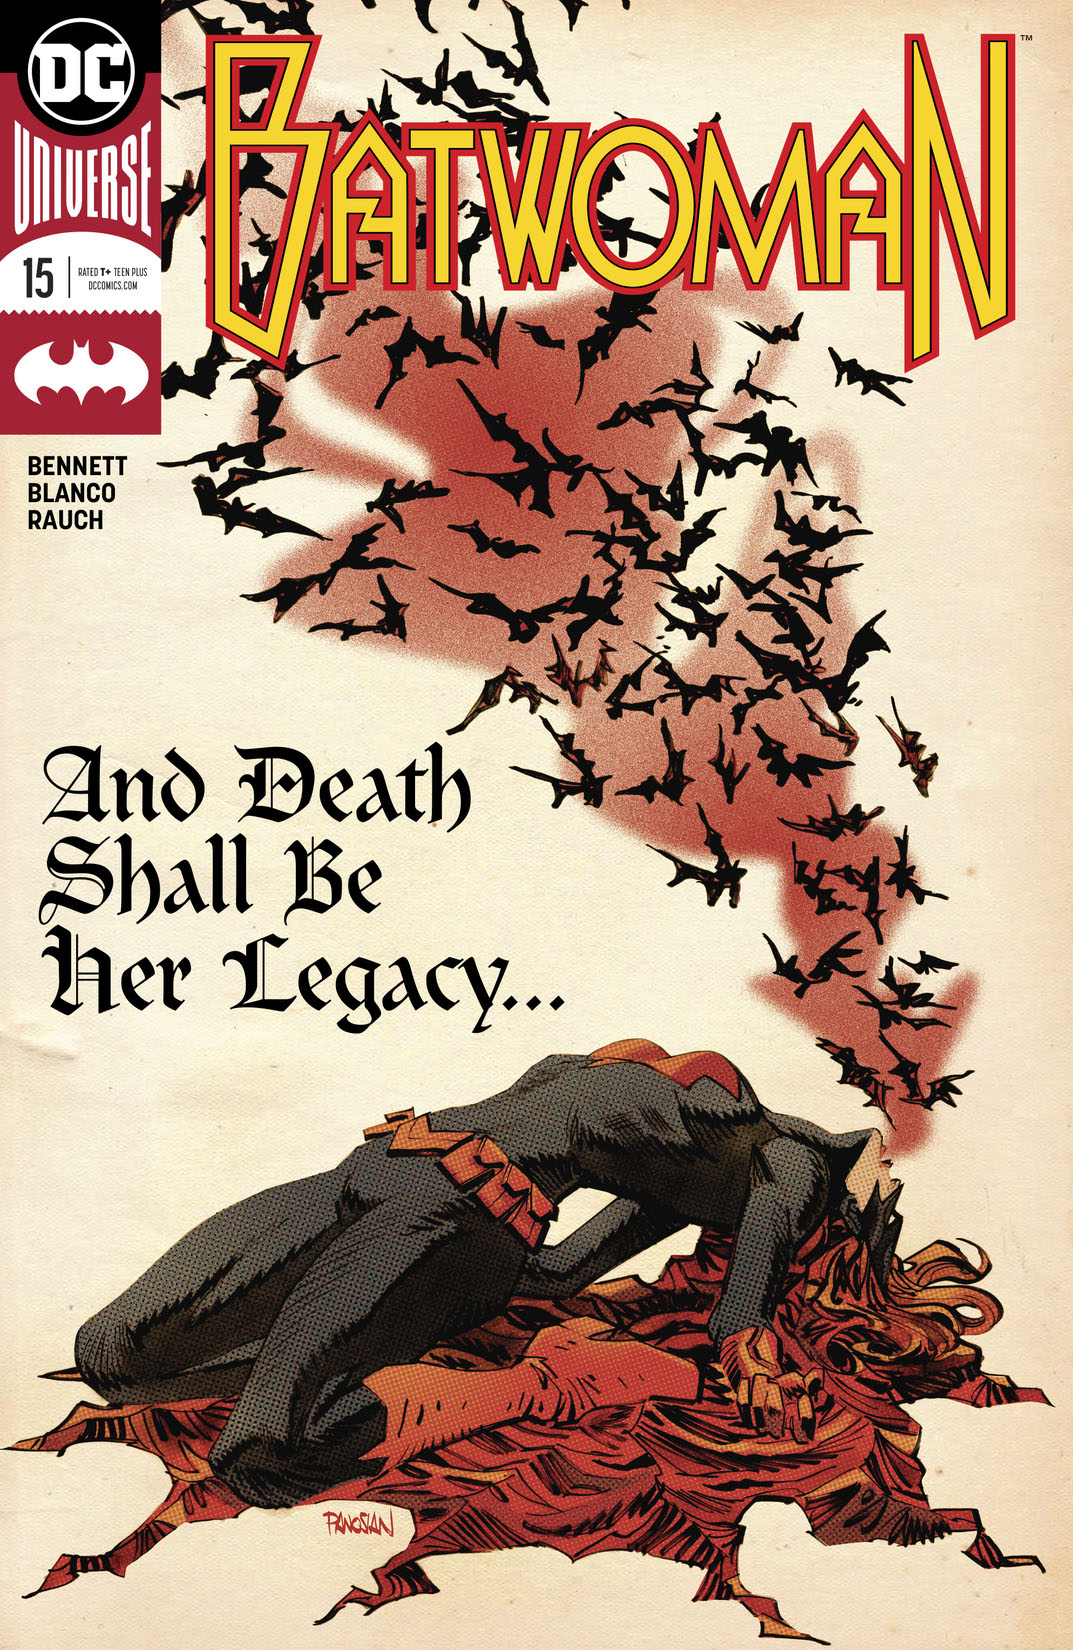 Batwoman (2017-) #15 preview images